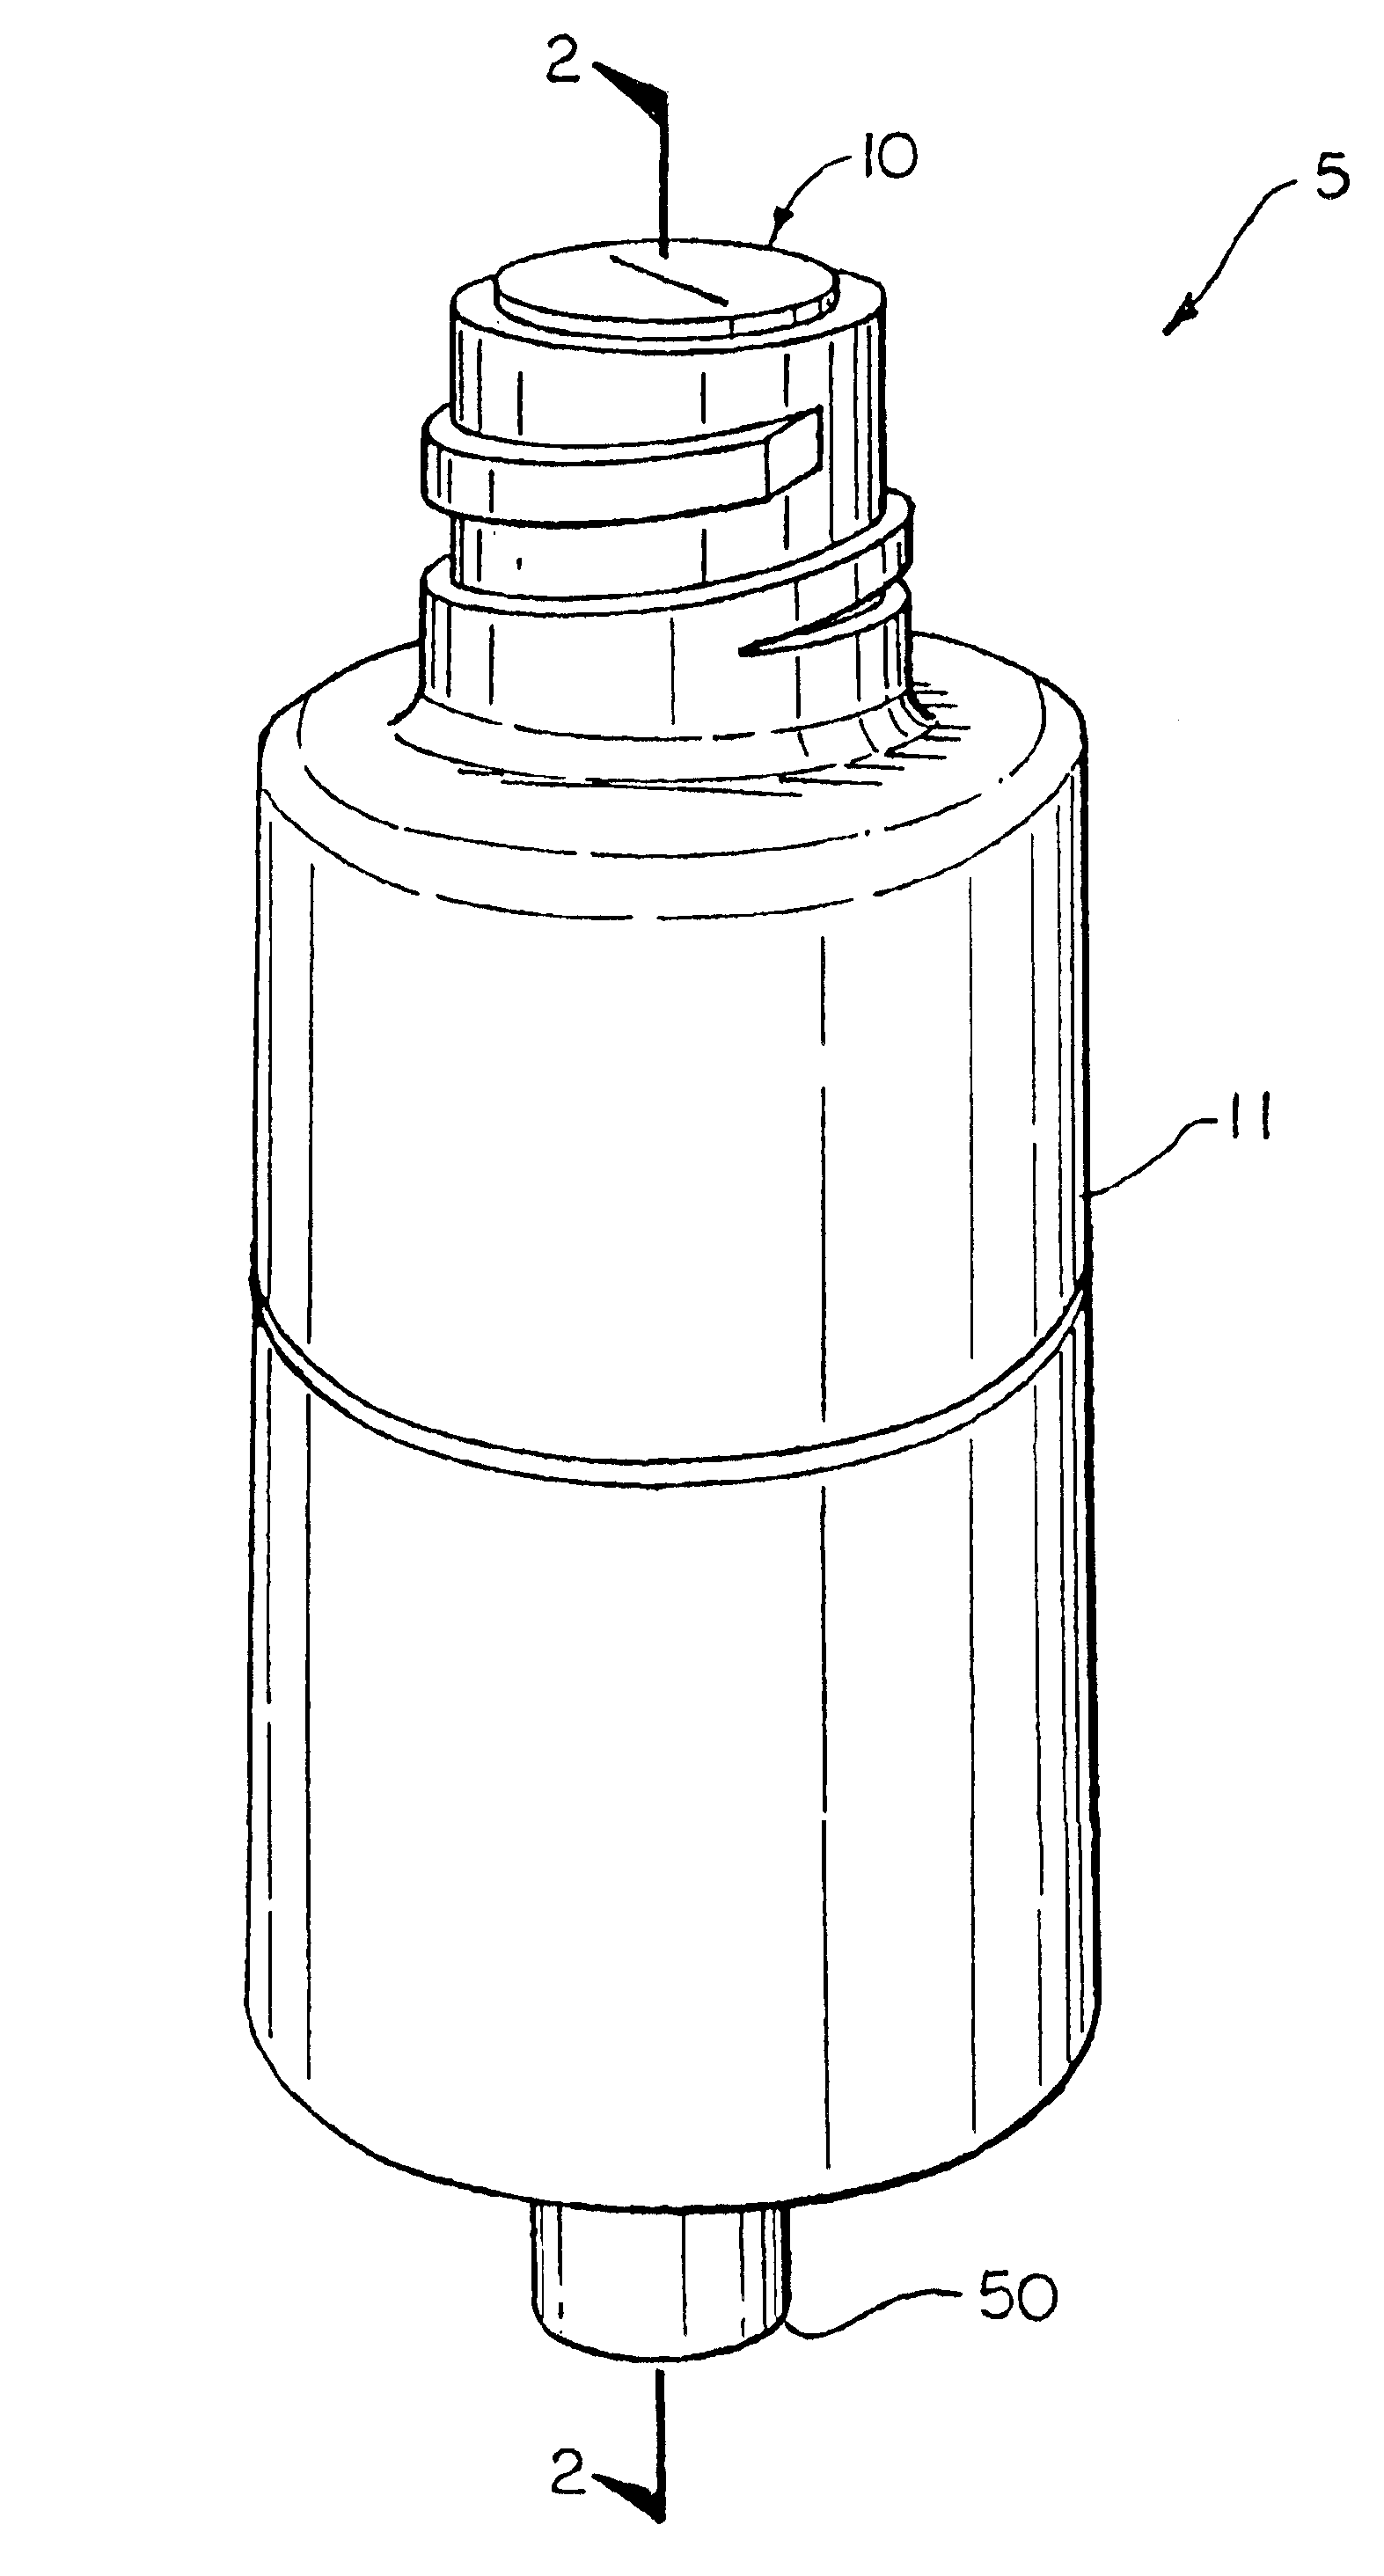 Apparatus for reducing fluid drawback through a medical valve